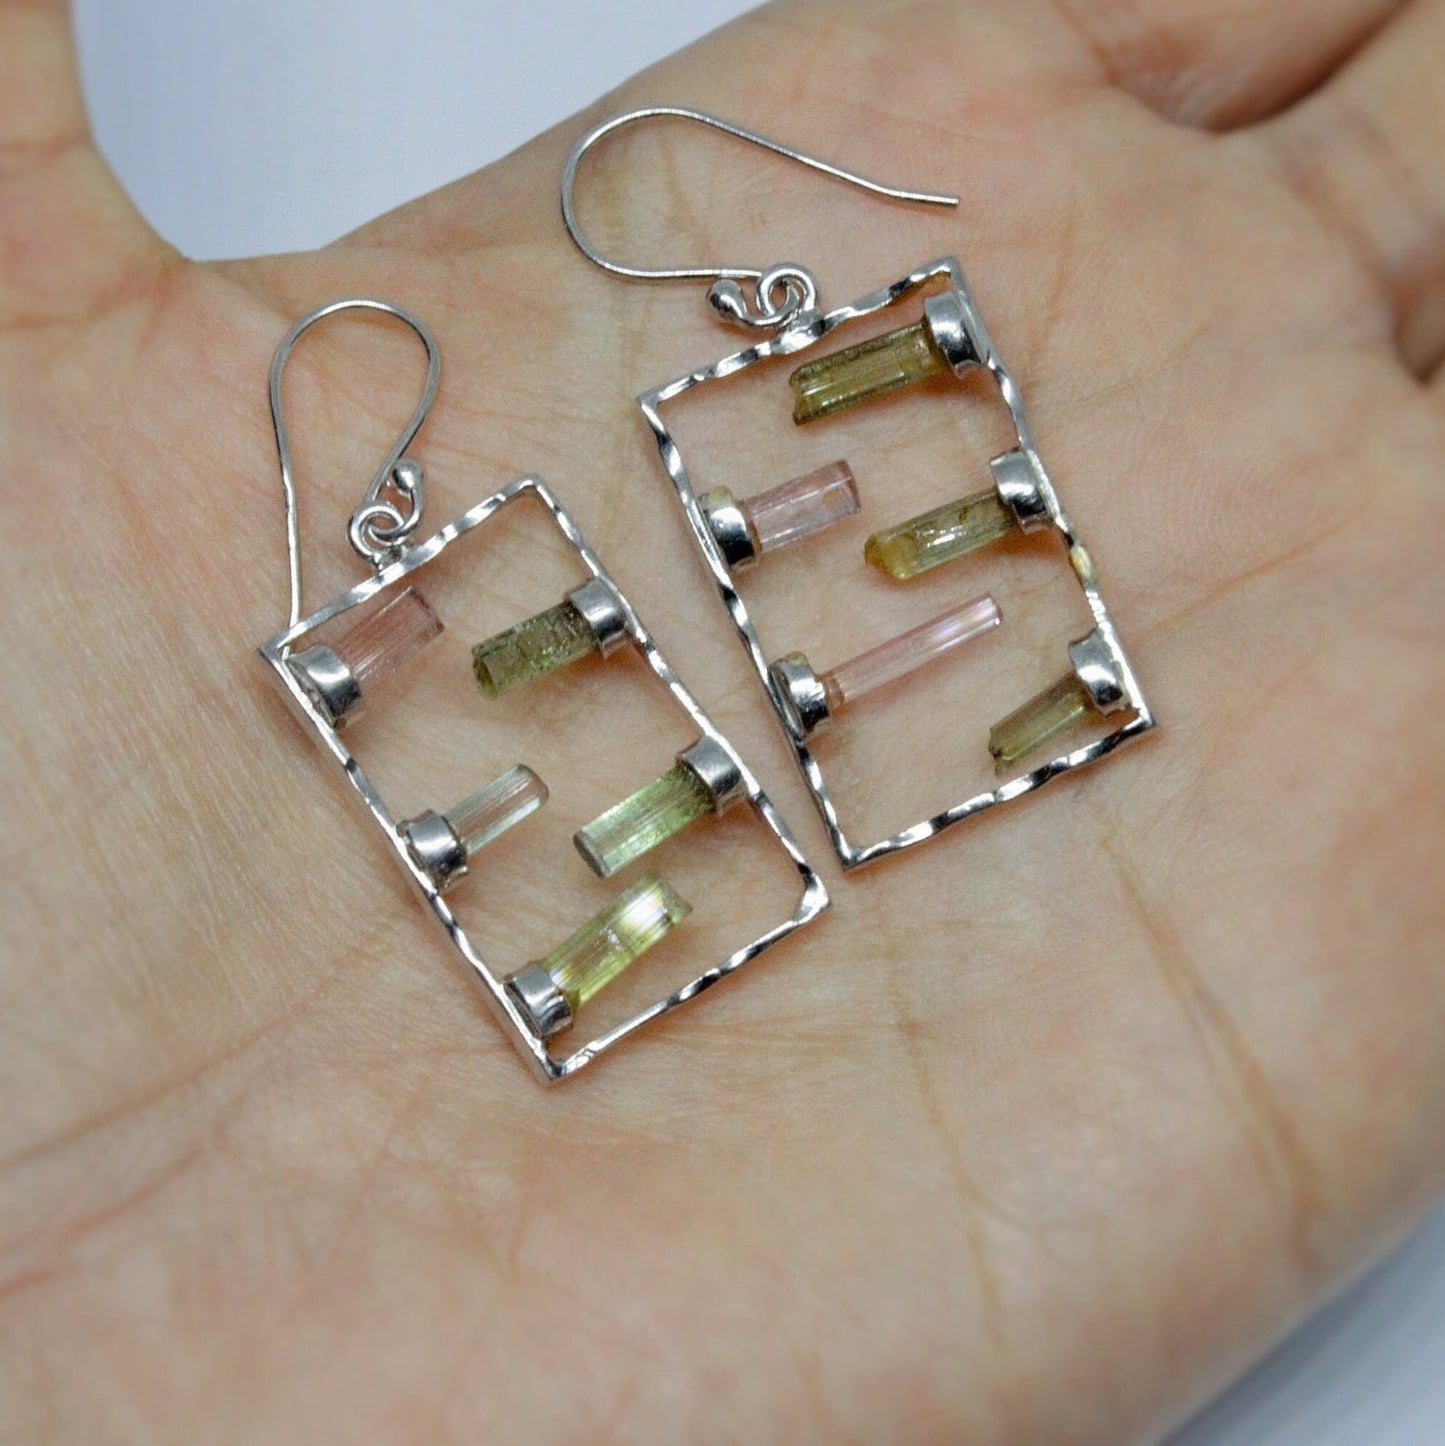 Mixed Green Tourmaline earrings, Sterling Silver Earrings, Tourmaline Jewelry, October Birthstone, Raw Gemstone Earrings, Gifts For Her